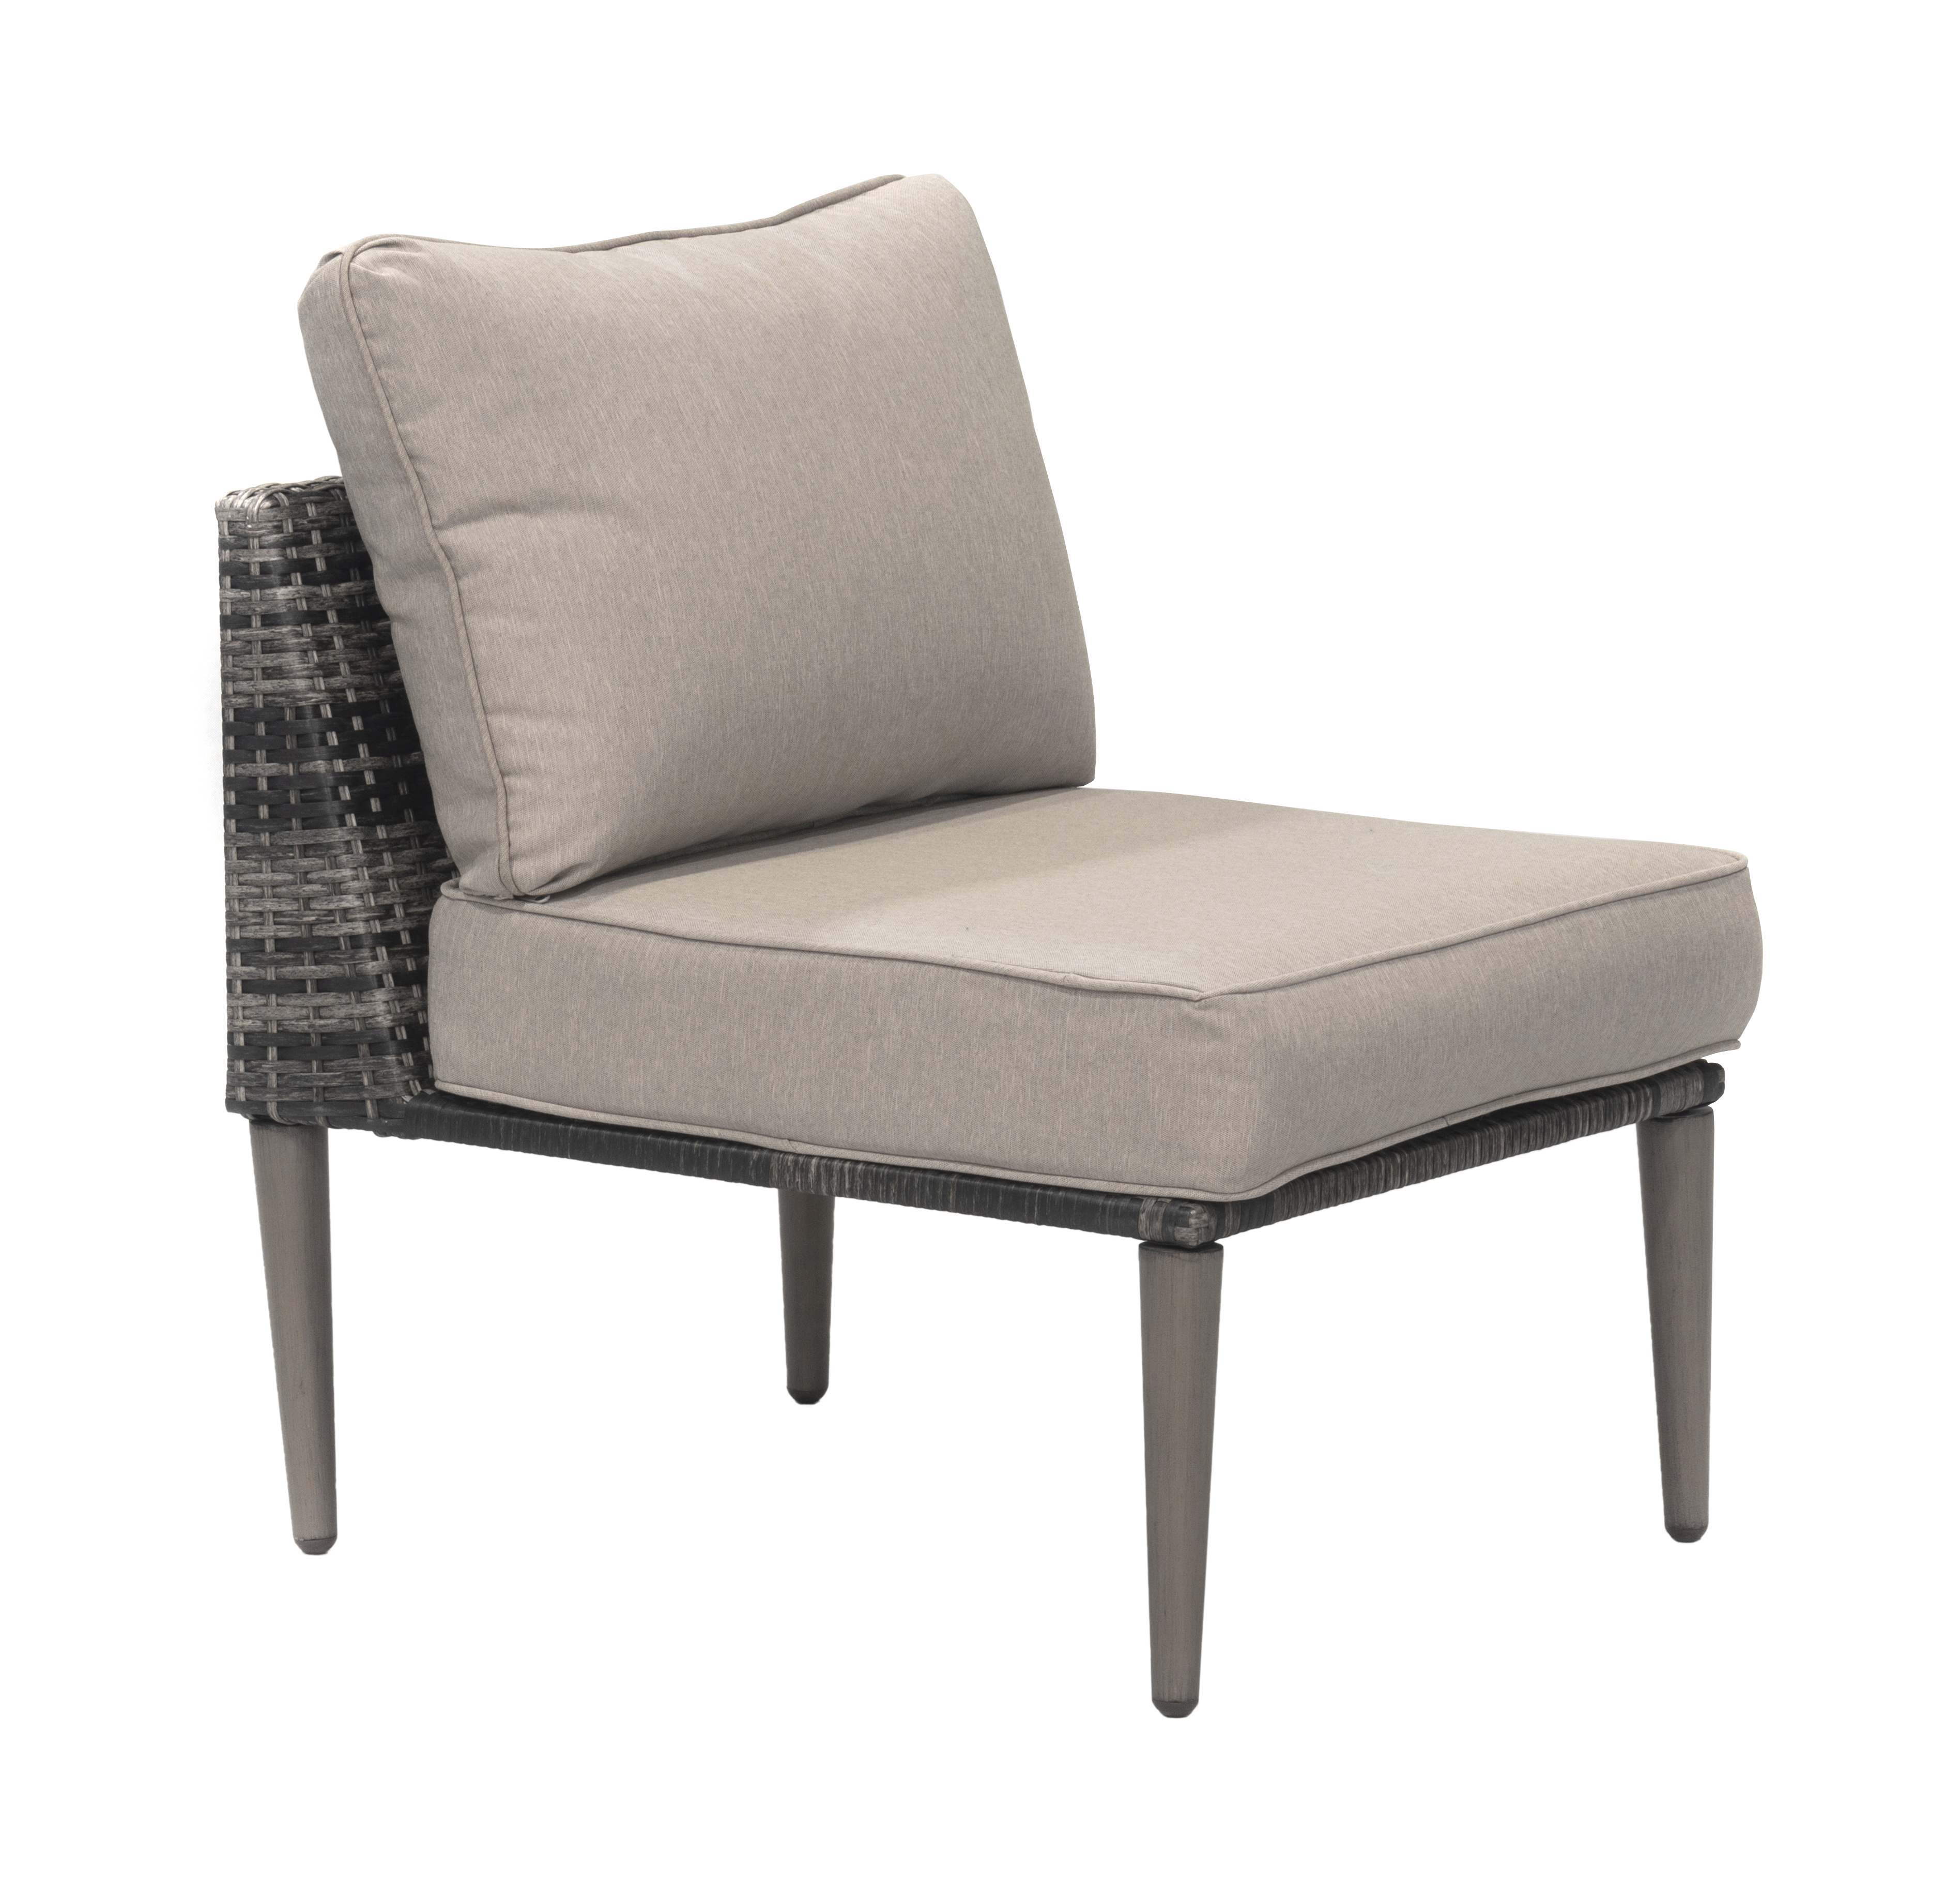 Donglin Outdoor Patio Furniture Sutton Creek 7-Piece Steel Sectional Sofa PE Wicker Rattan Set,Gray - image 11 of 16